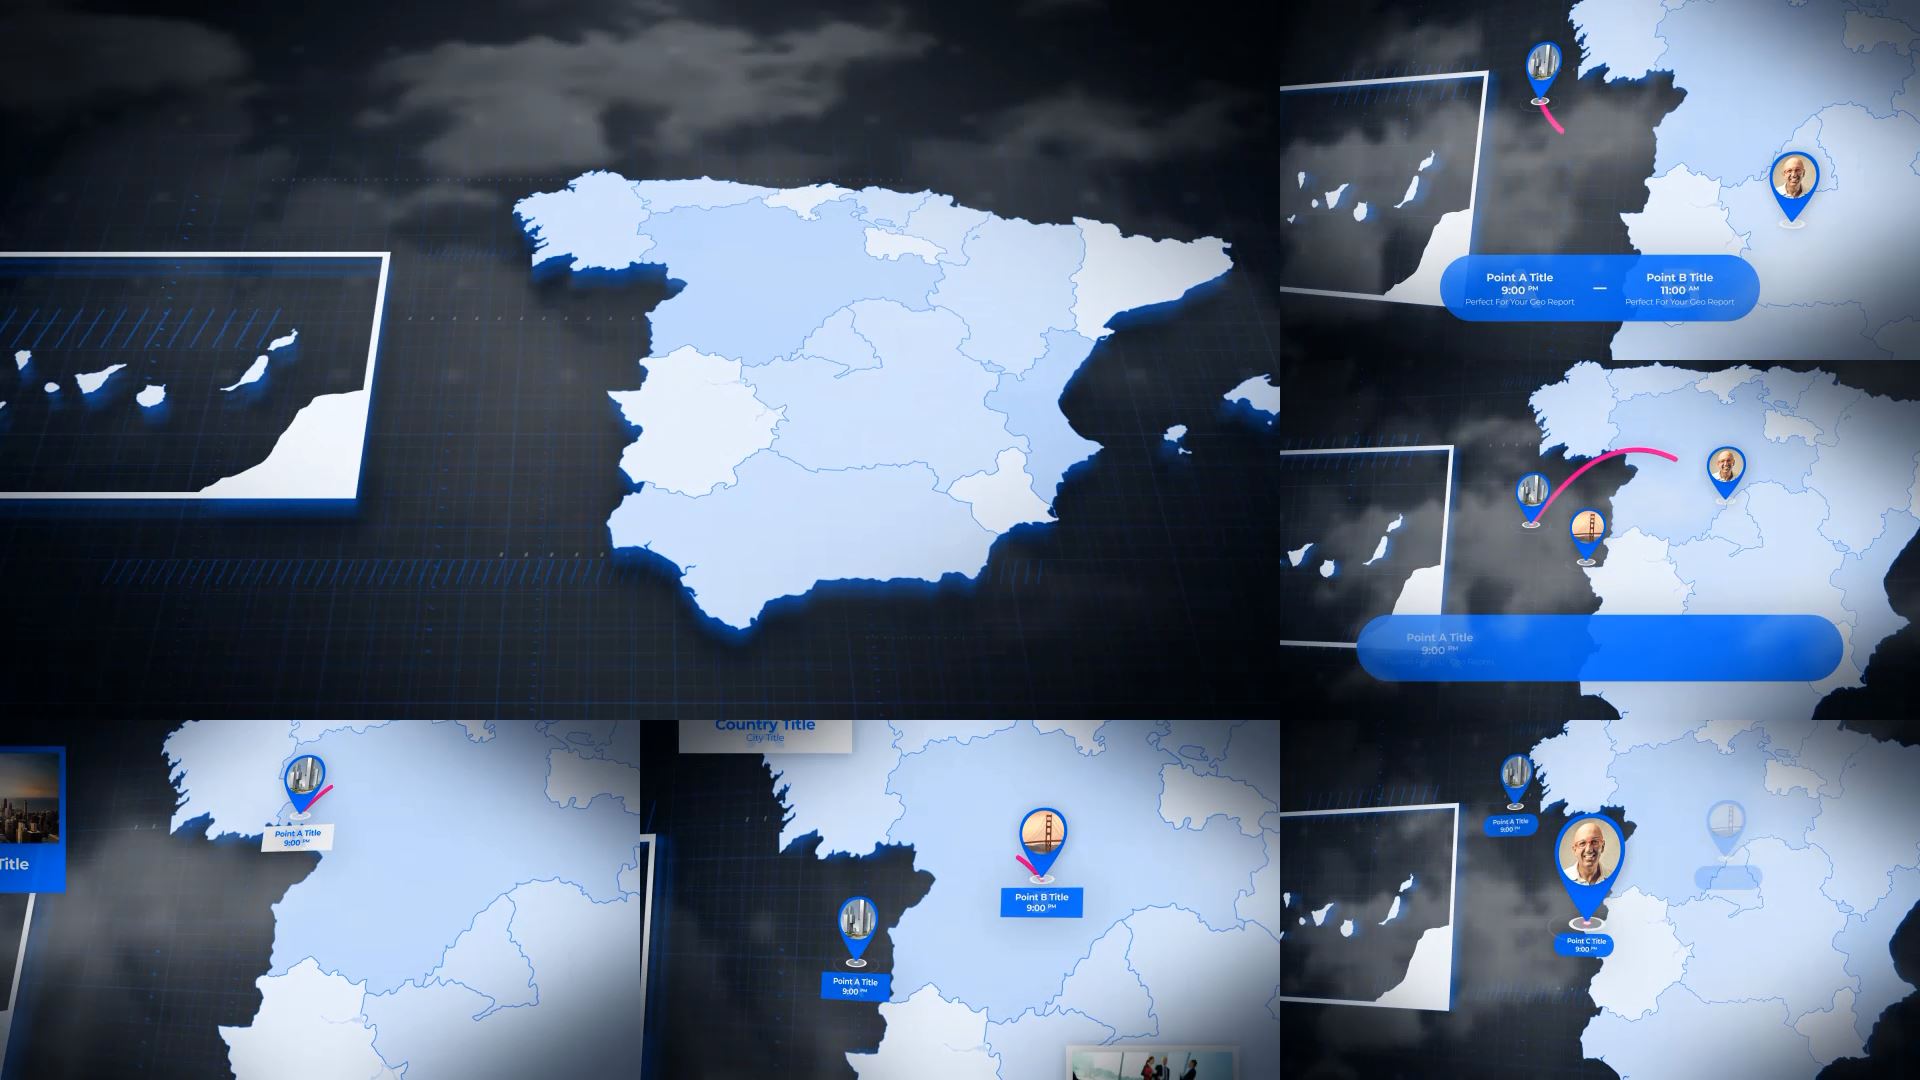  Spain Animated Map - Kingdom of Spain Map Kit 